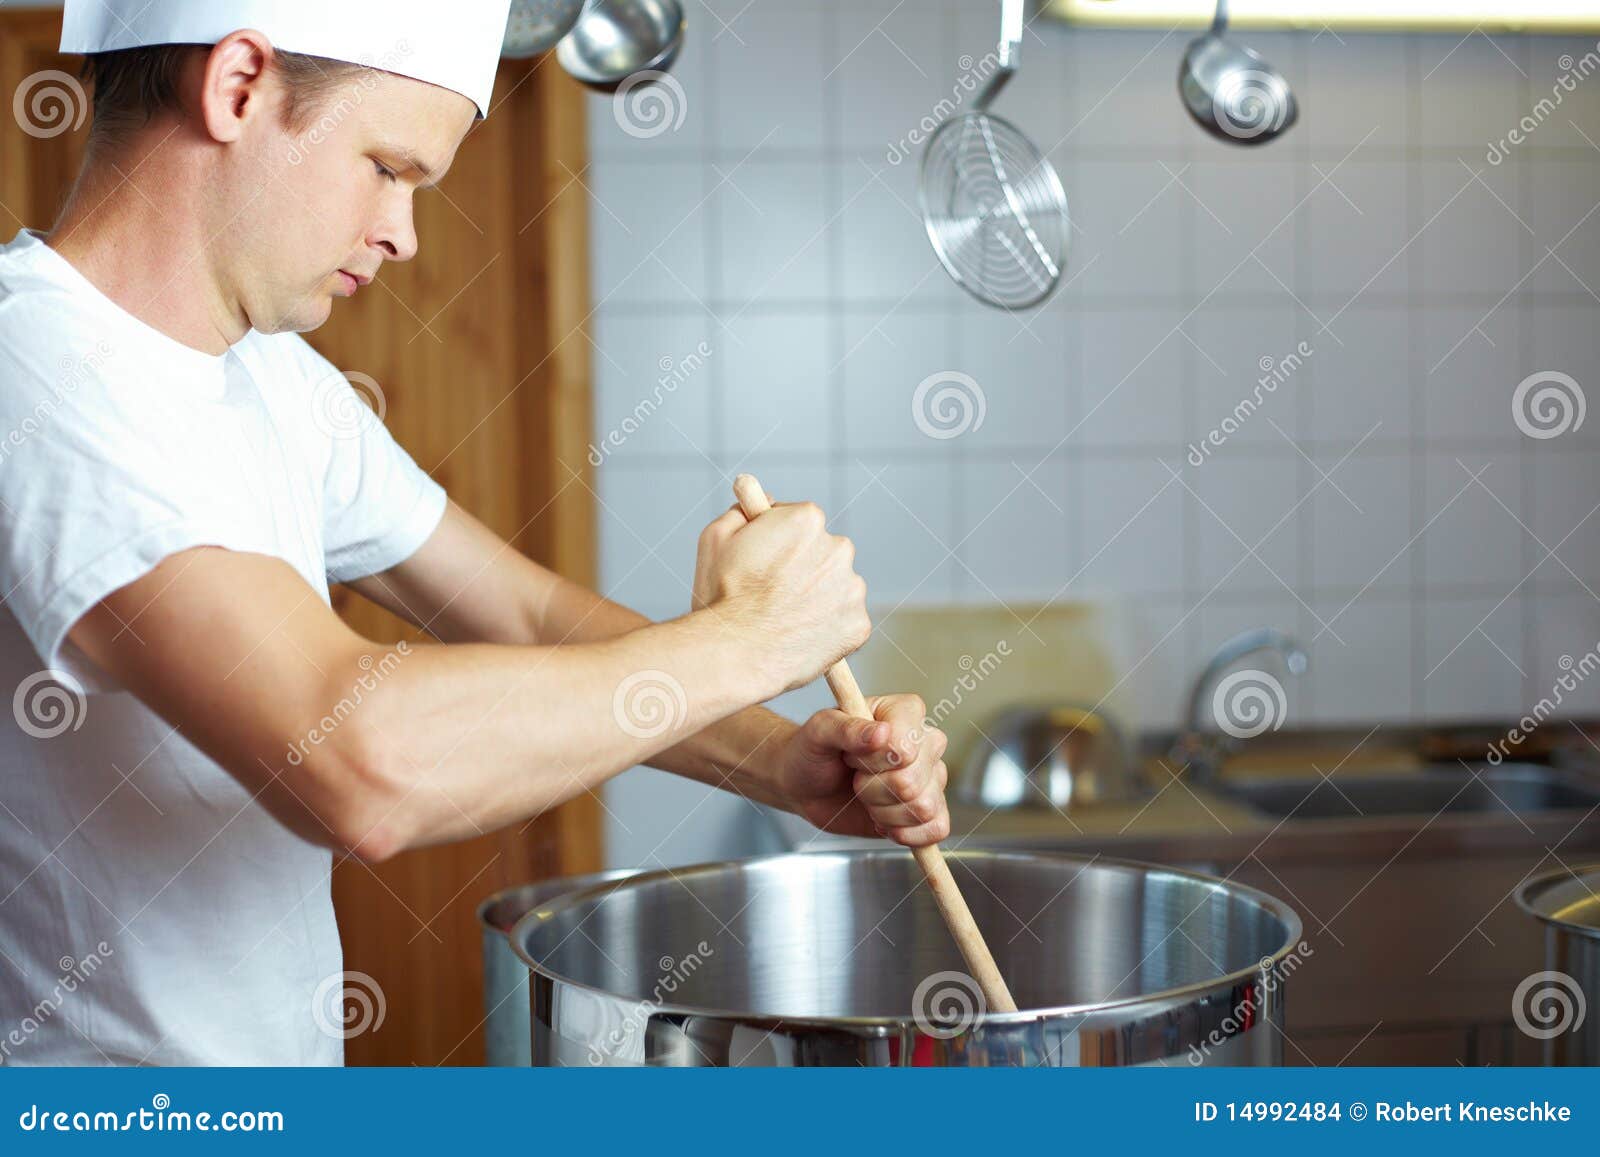 chef-stirring-pot-14992484.jpg